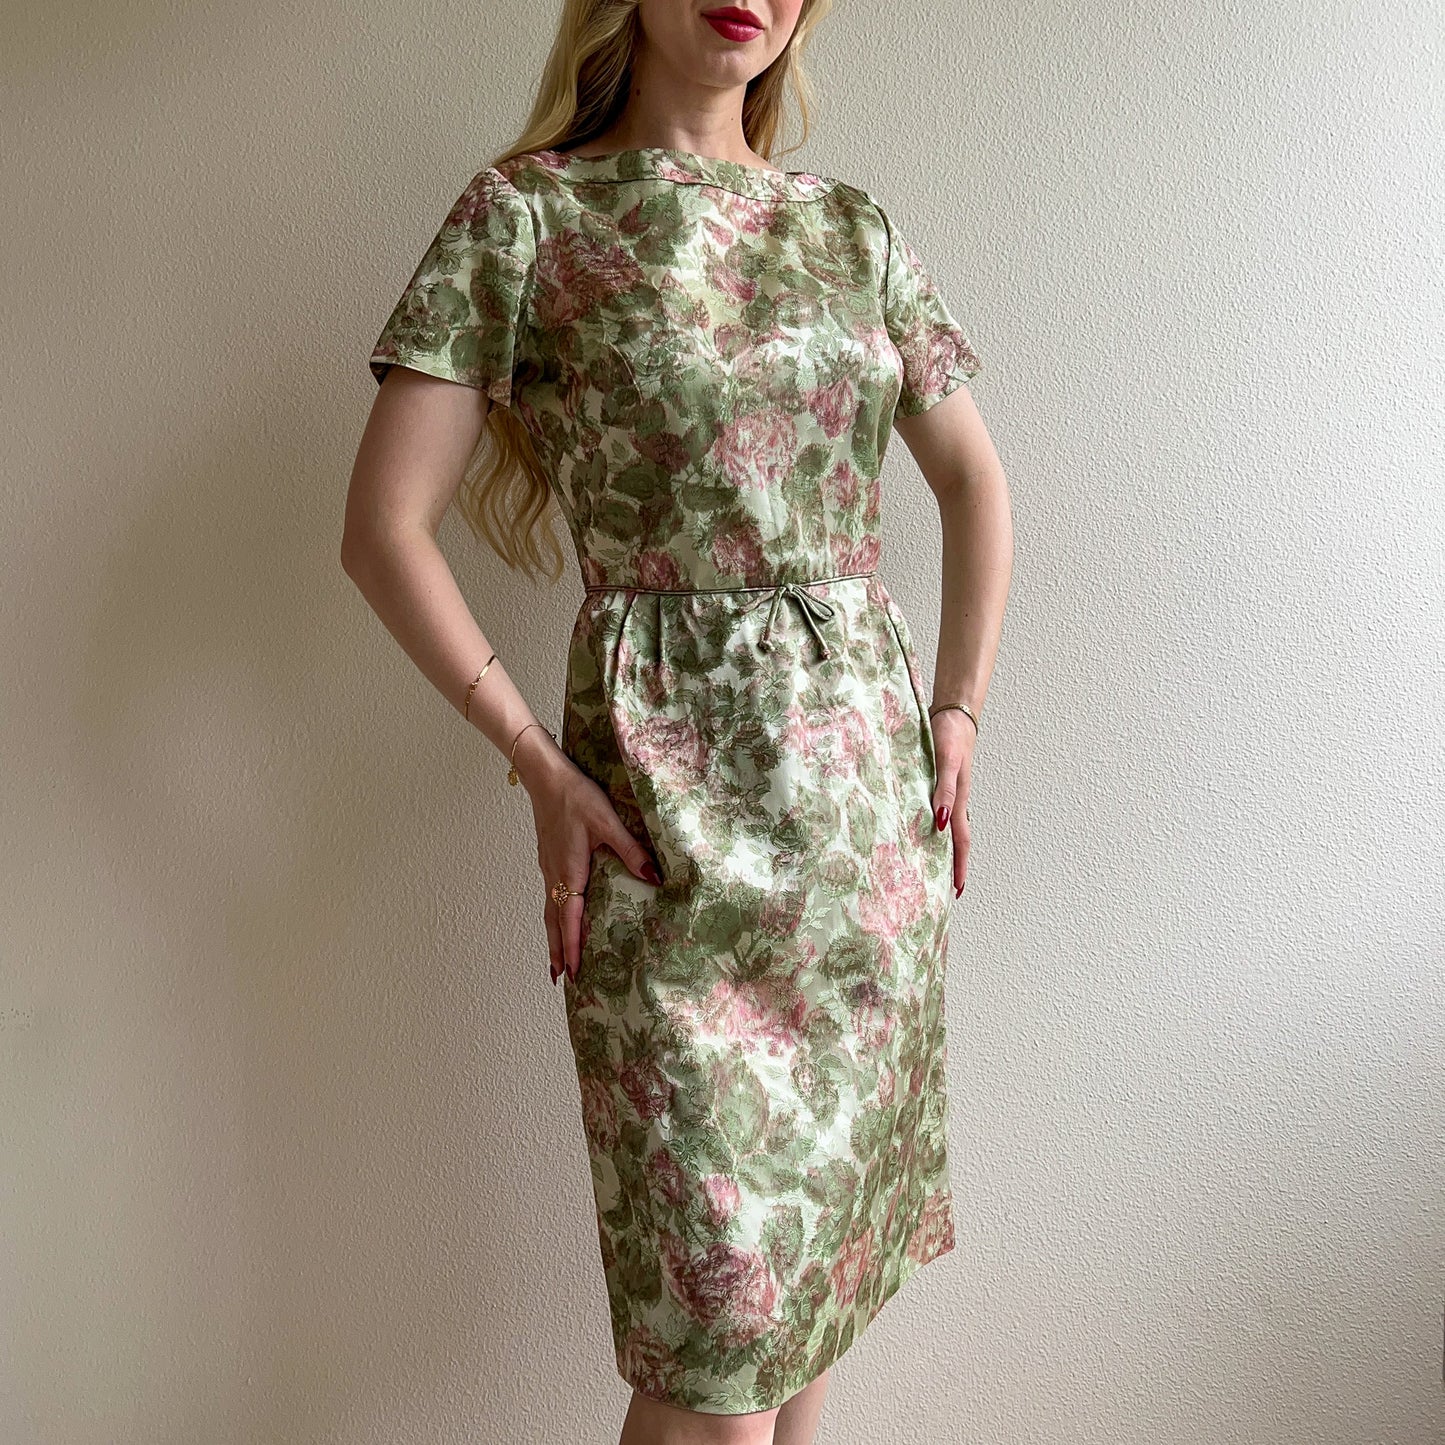 Charming 1950s Rose Print Sheath Cocktail Dress (S/M)